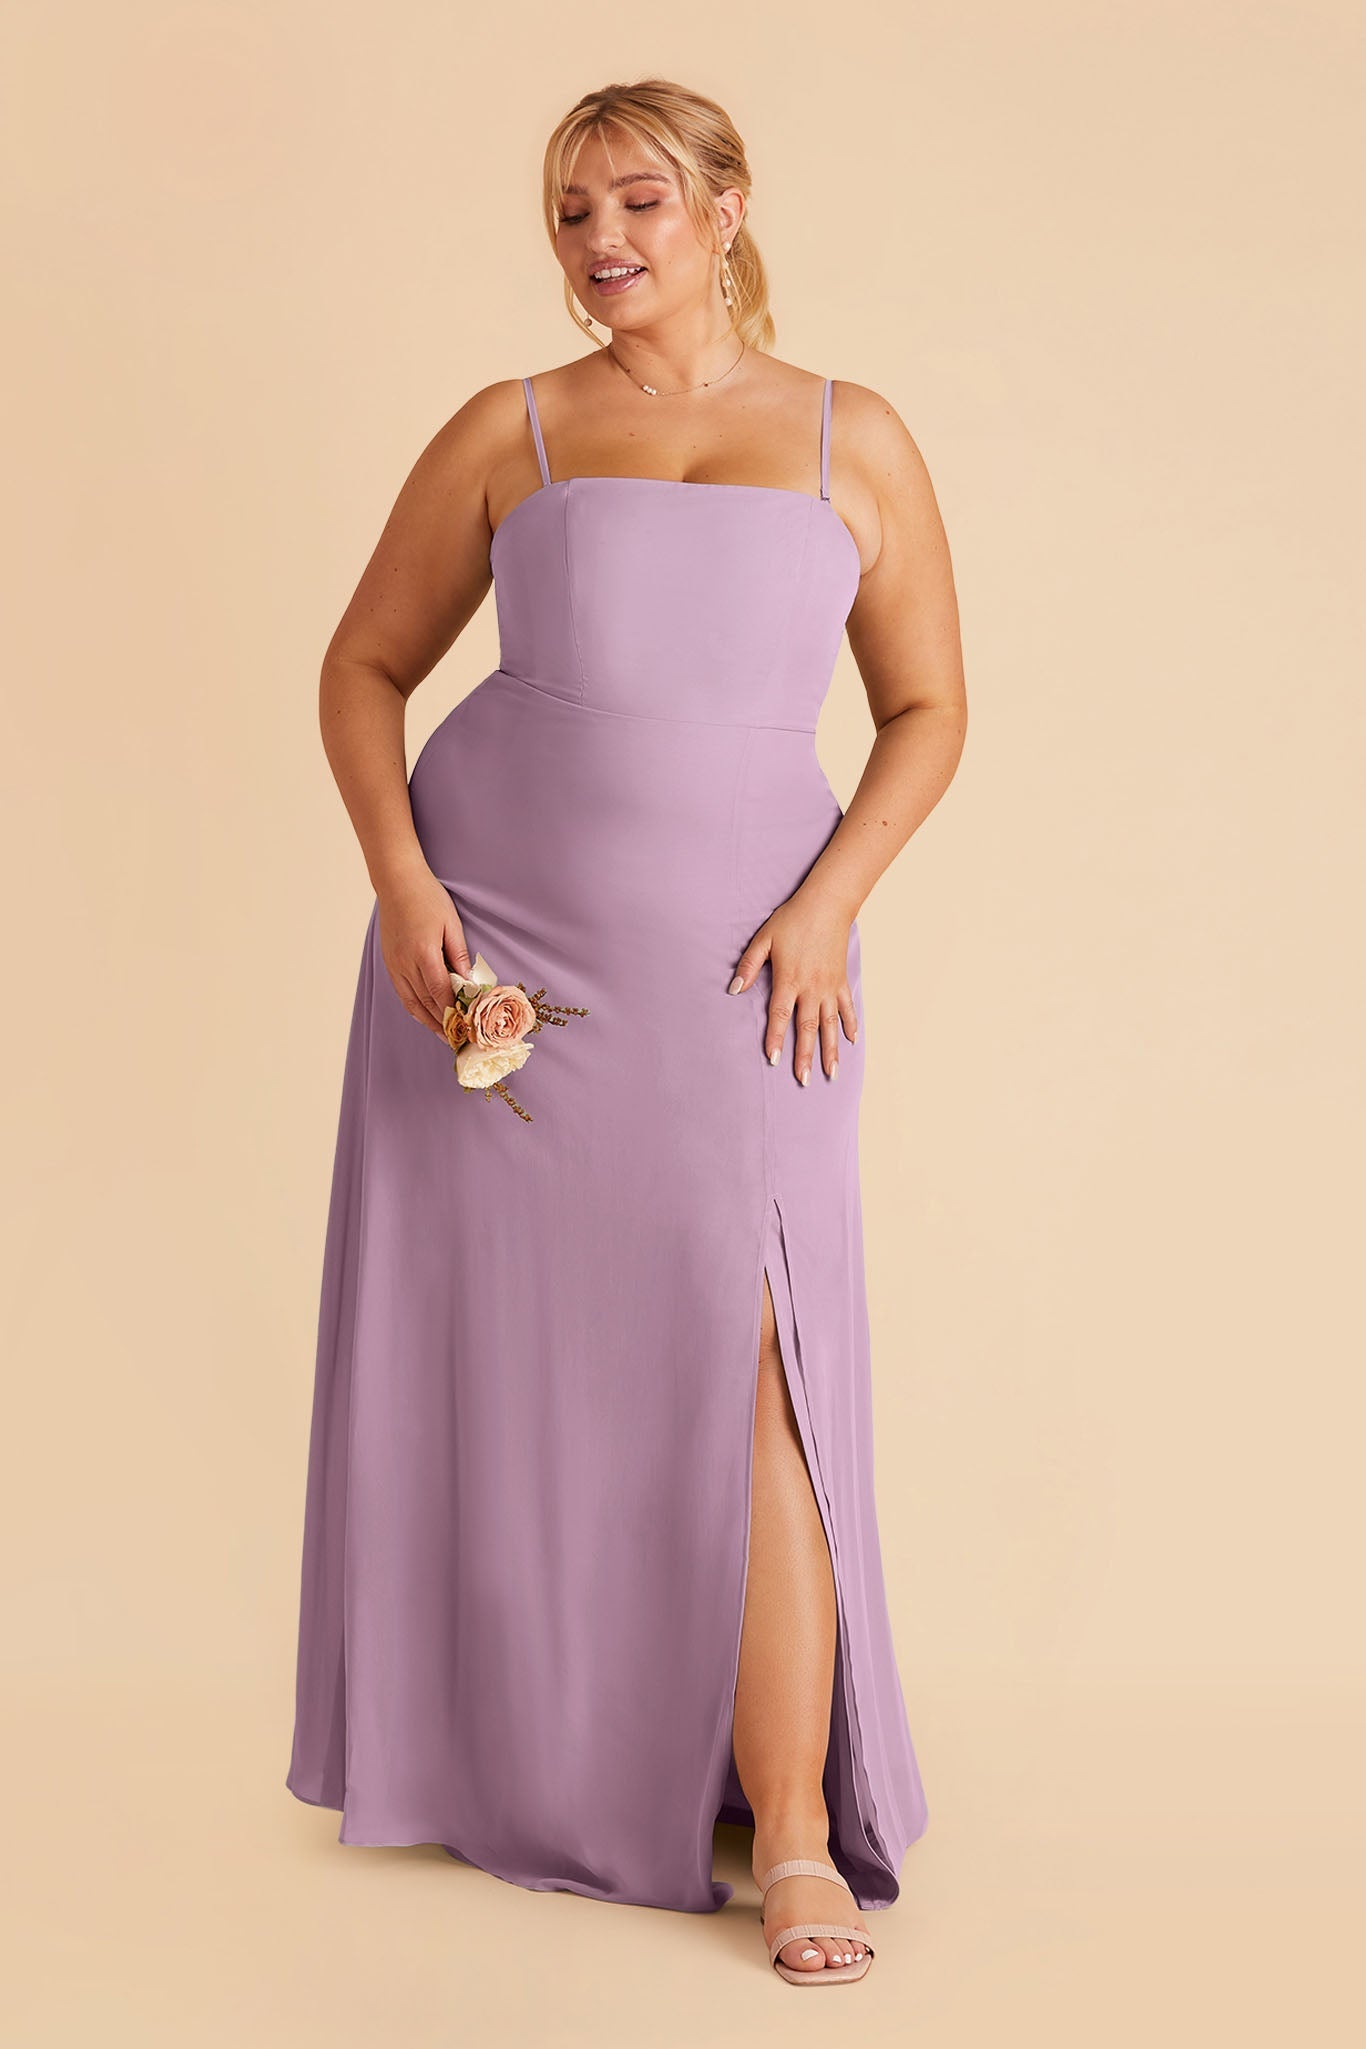 Lavender Chris Convertible Chiffon Dress by Birdy Grey